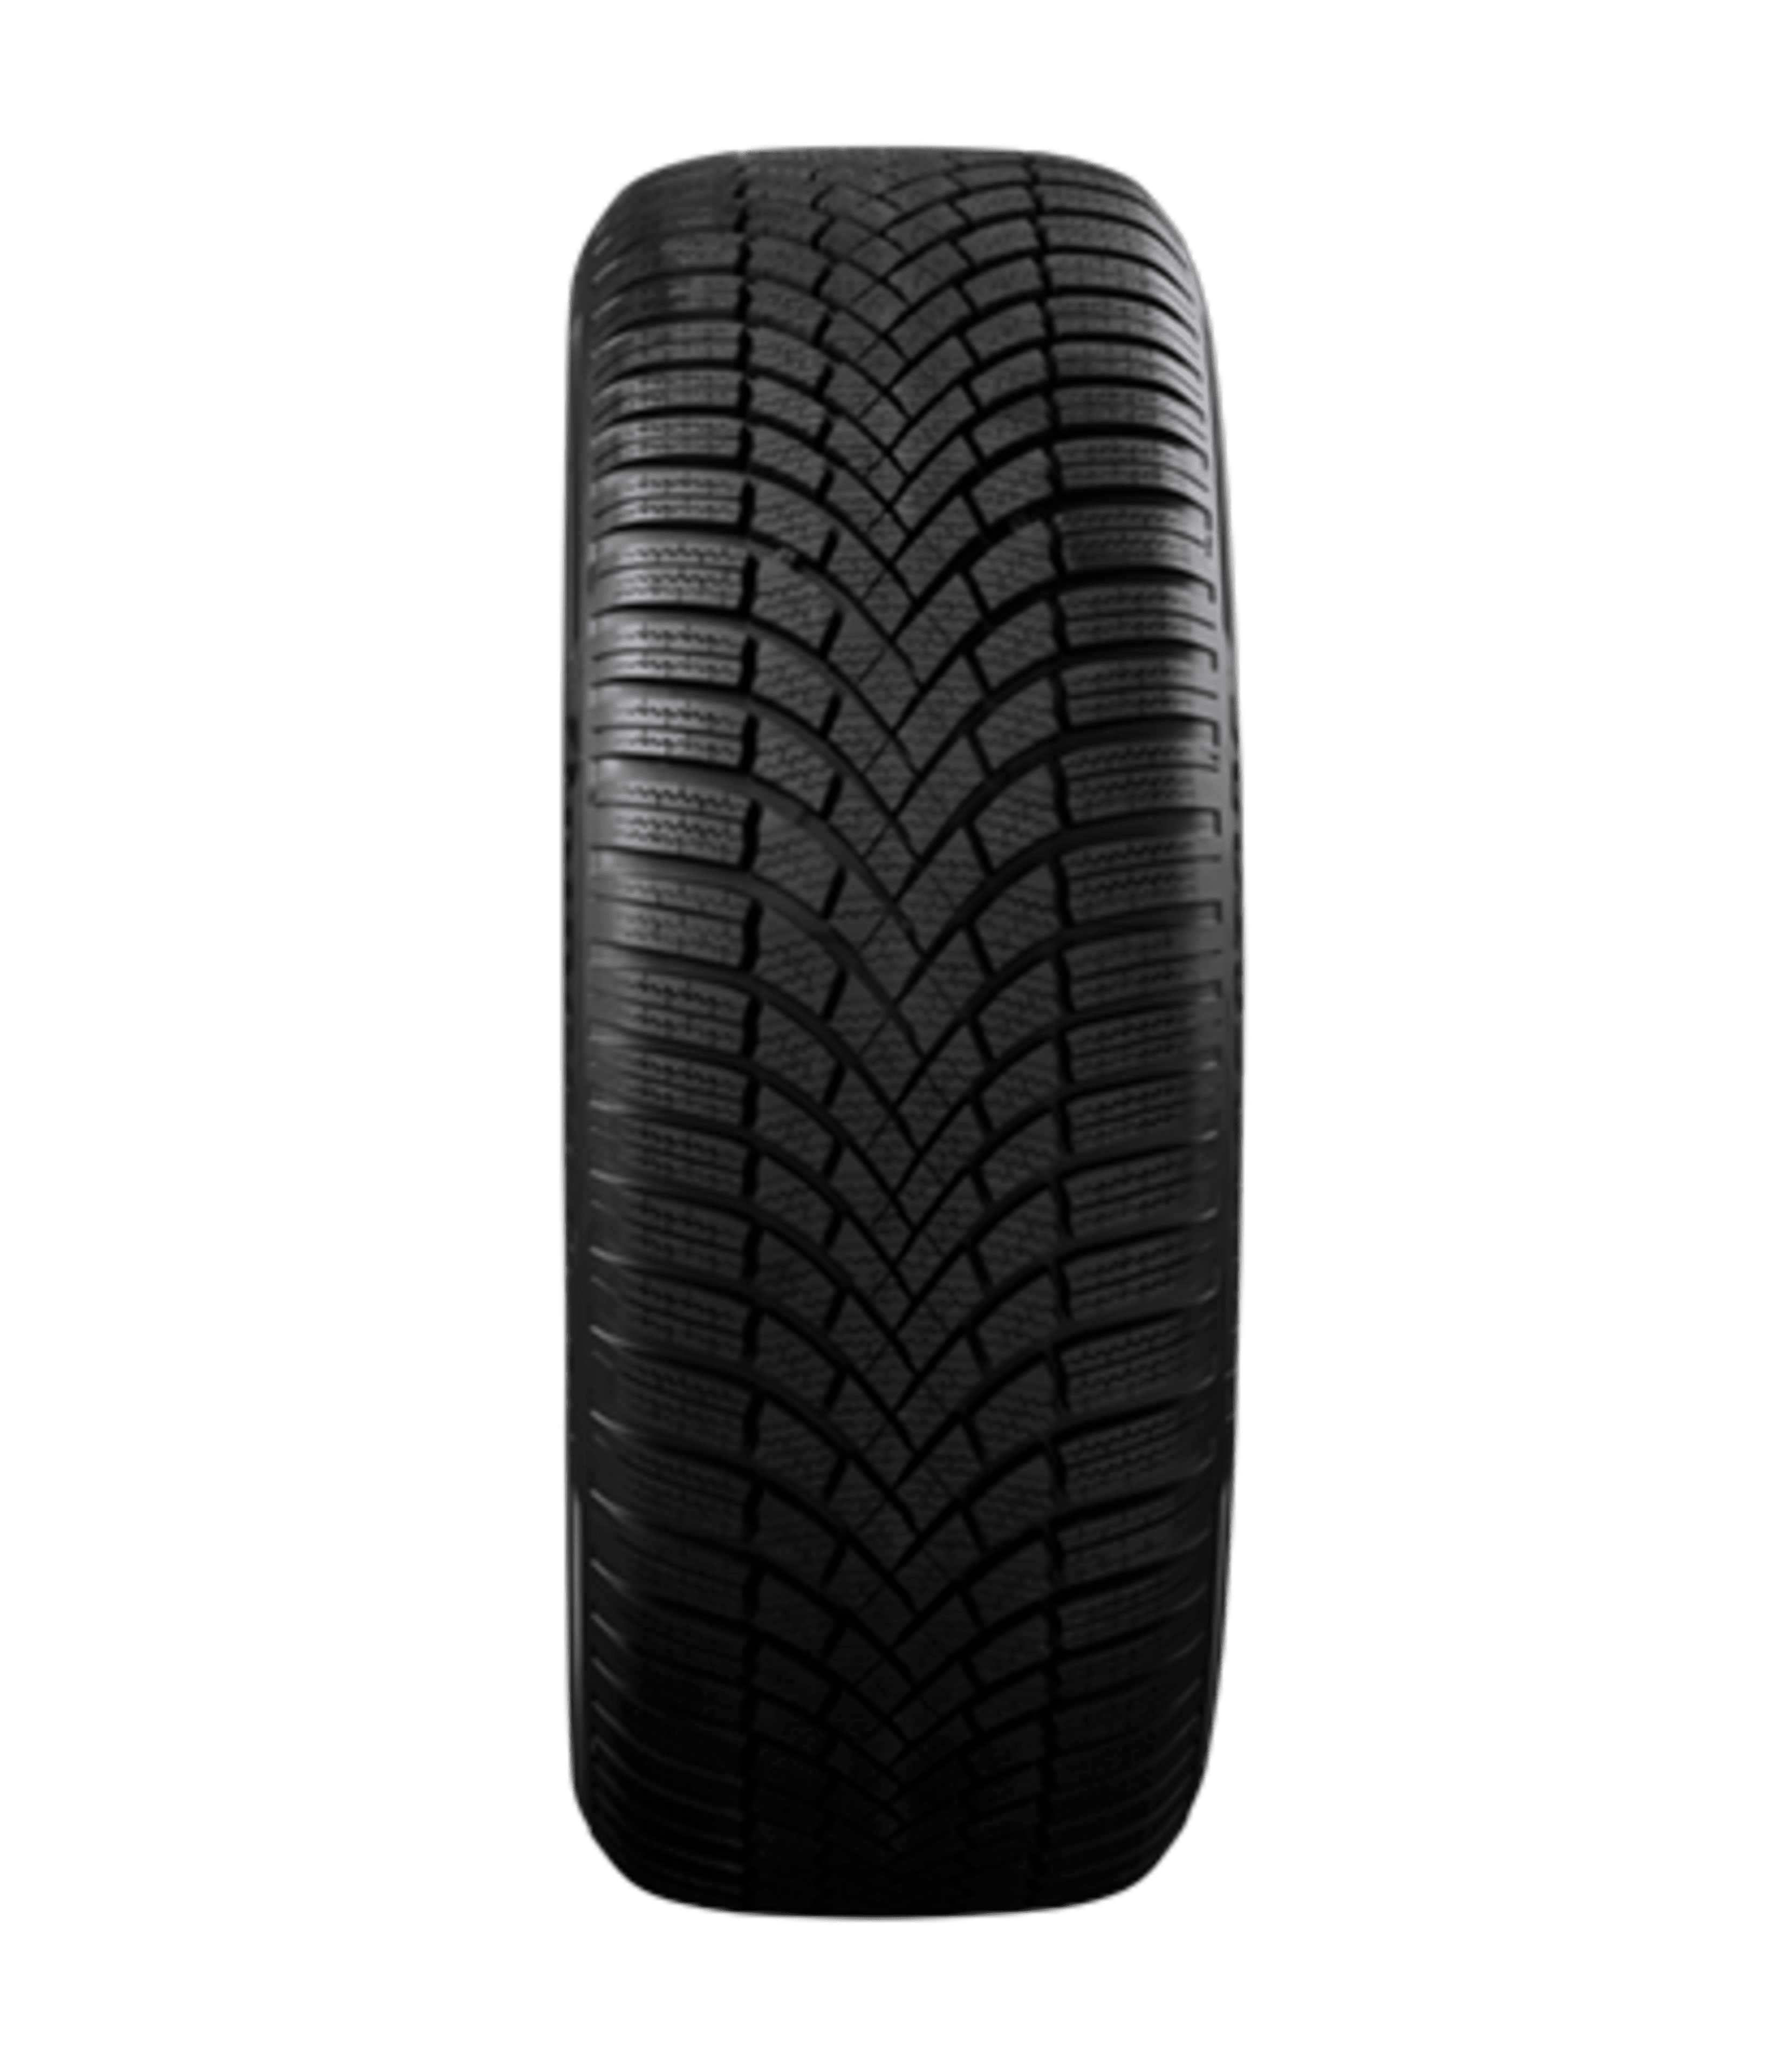 | LM005 Buy Bridgestone Tires Blizzak SimpleTire Online